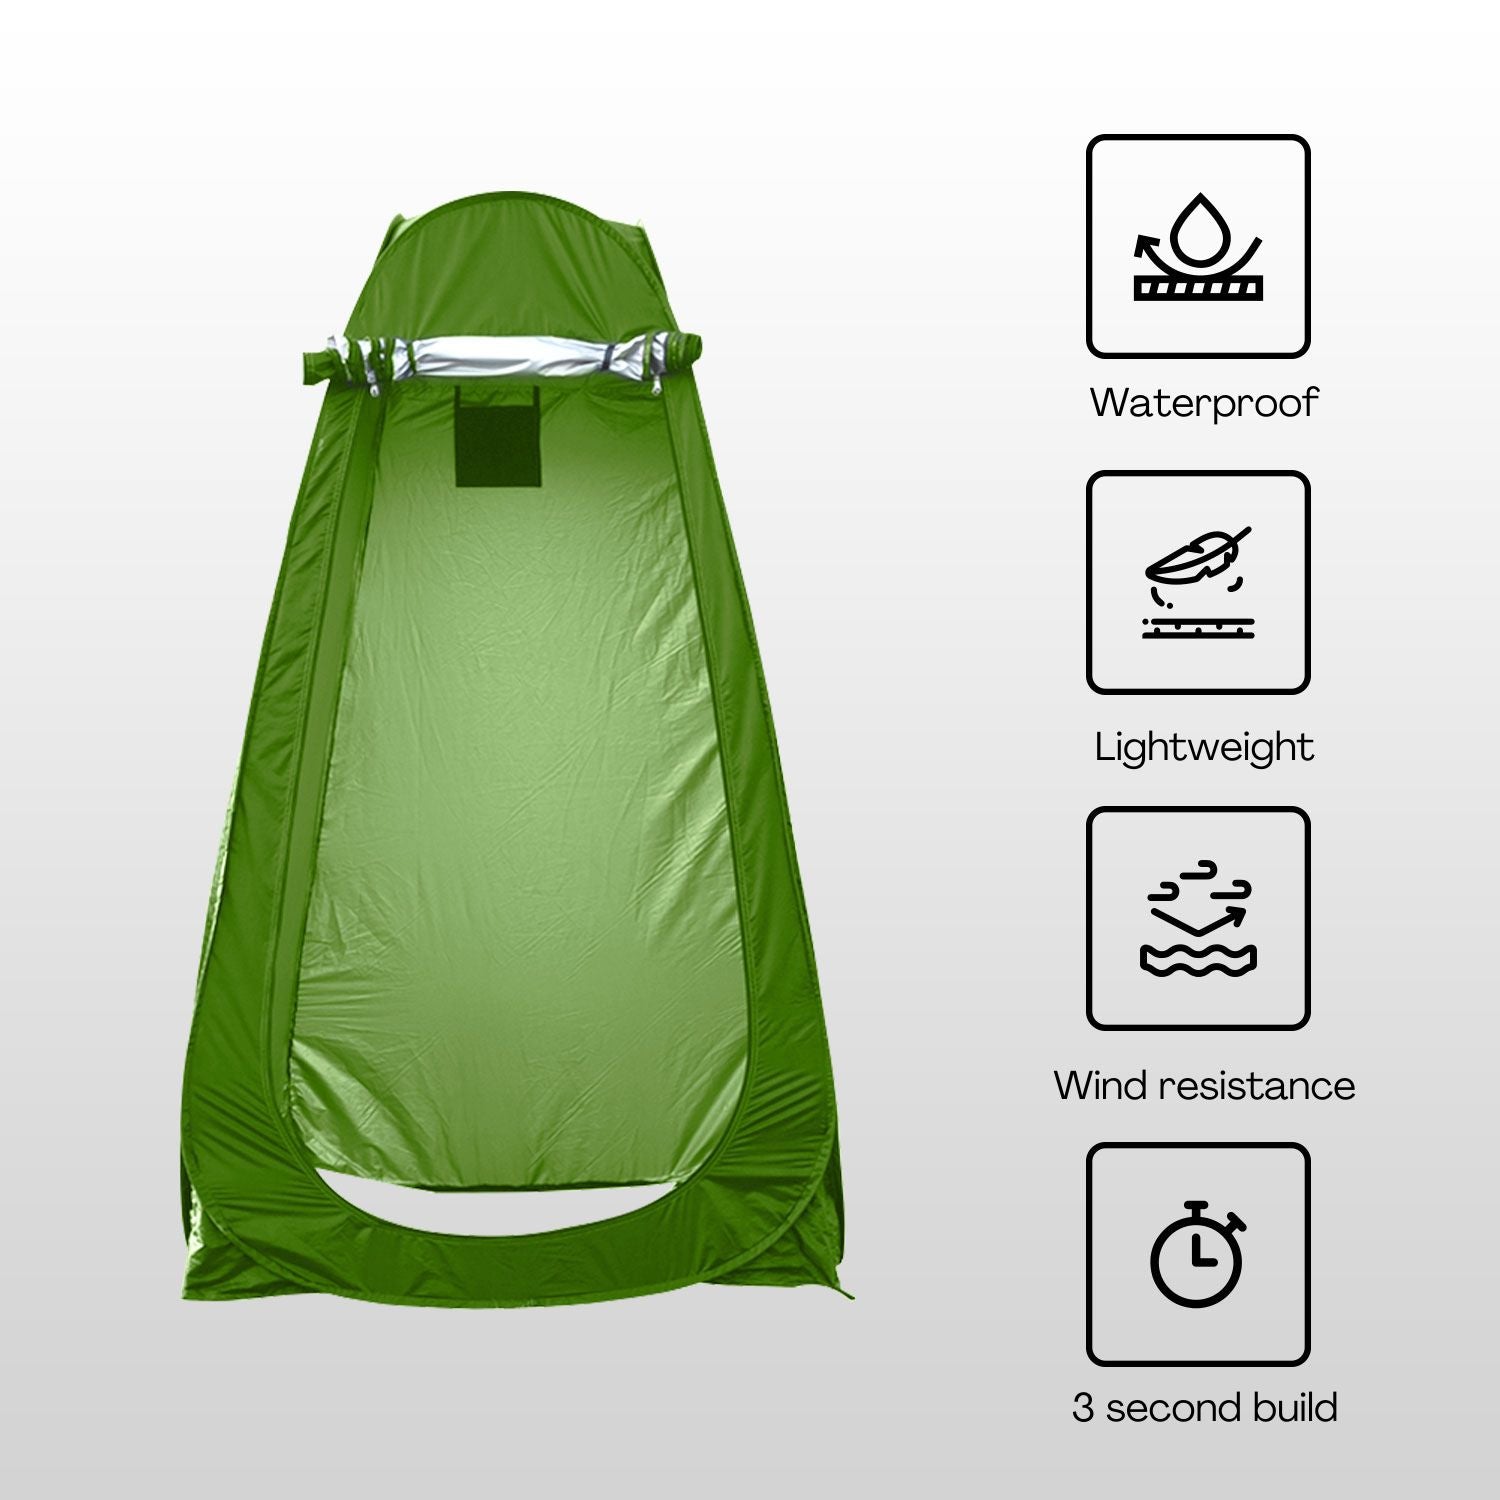 KILIROO Shower Tent with 2 Window (Green) - SILBERSHELL